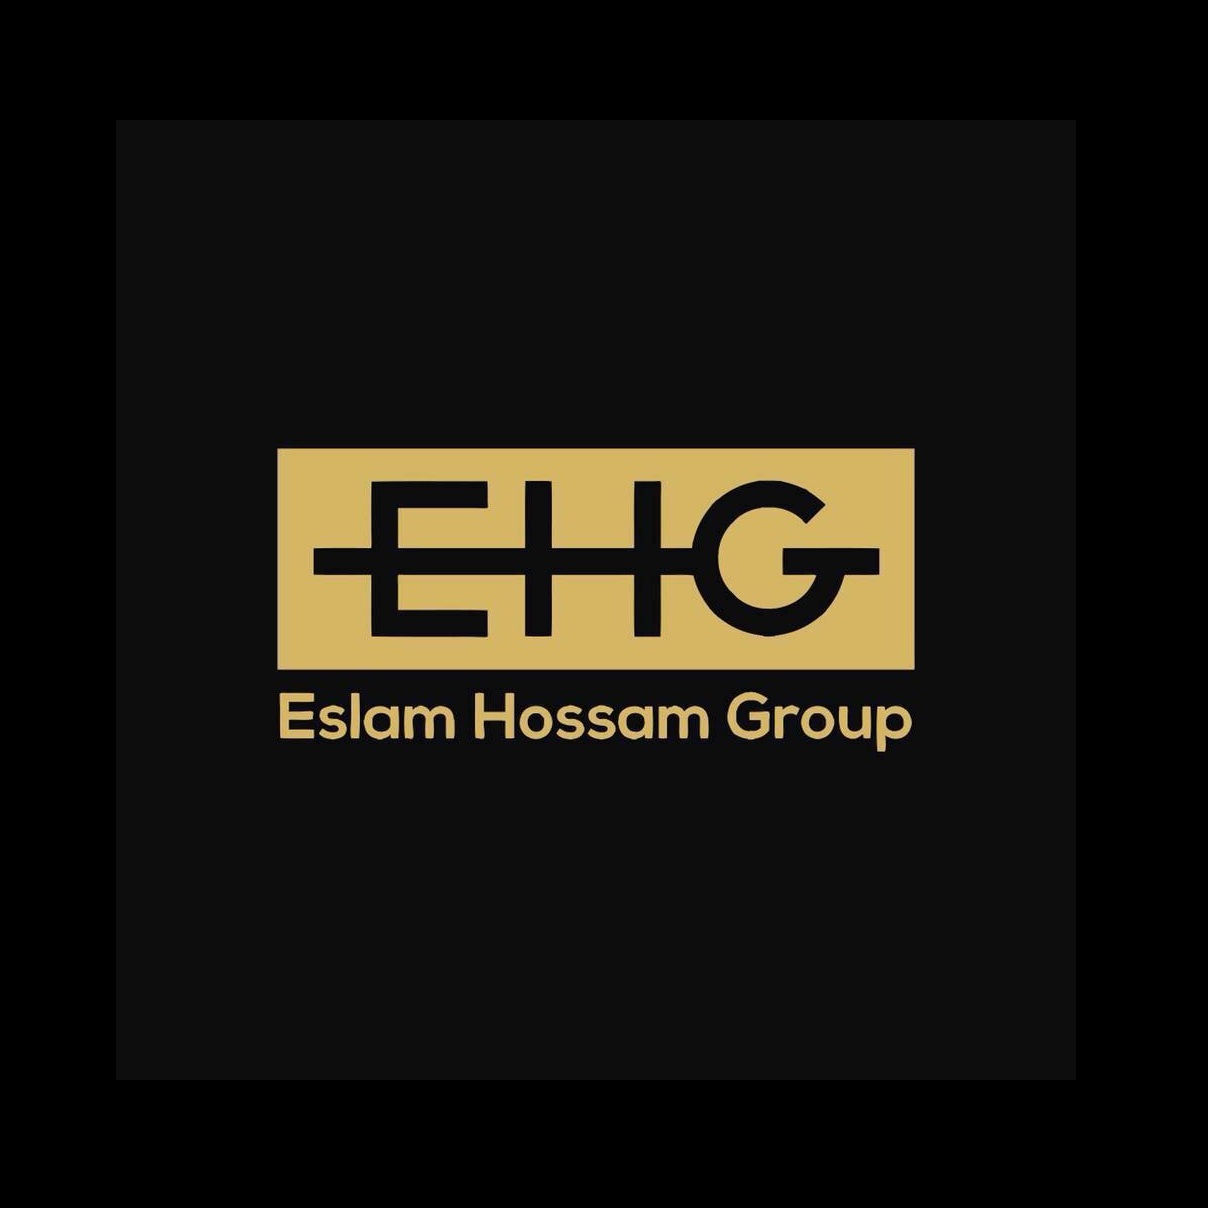 Eslam Hossam Group